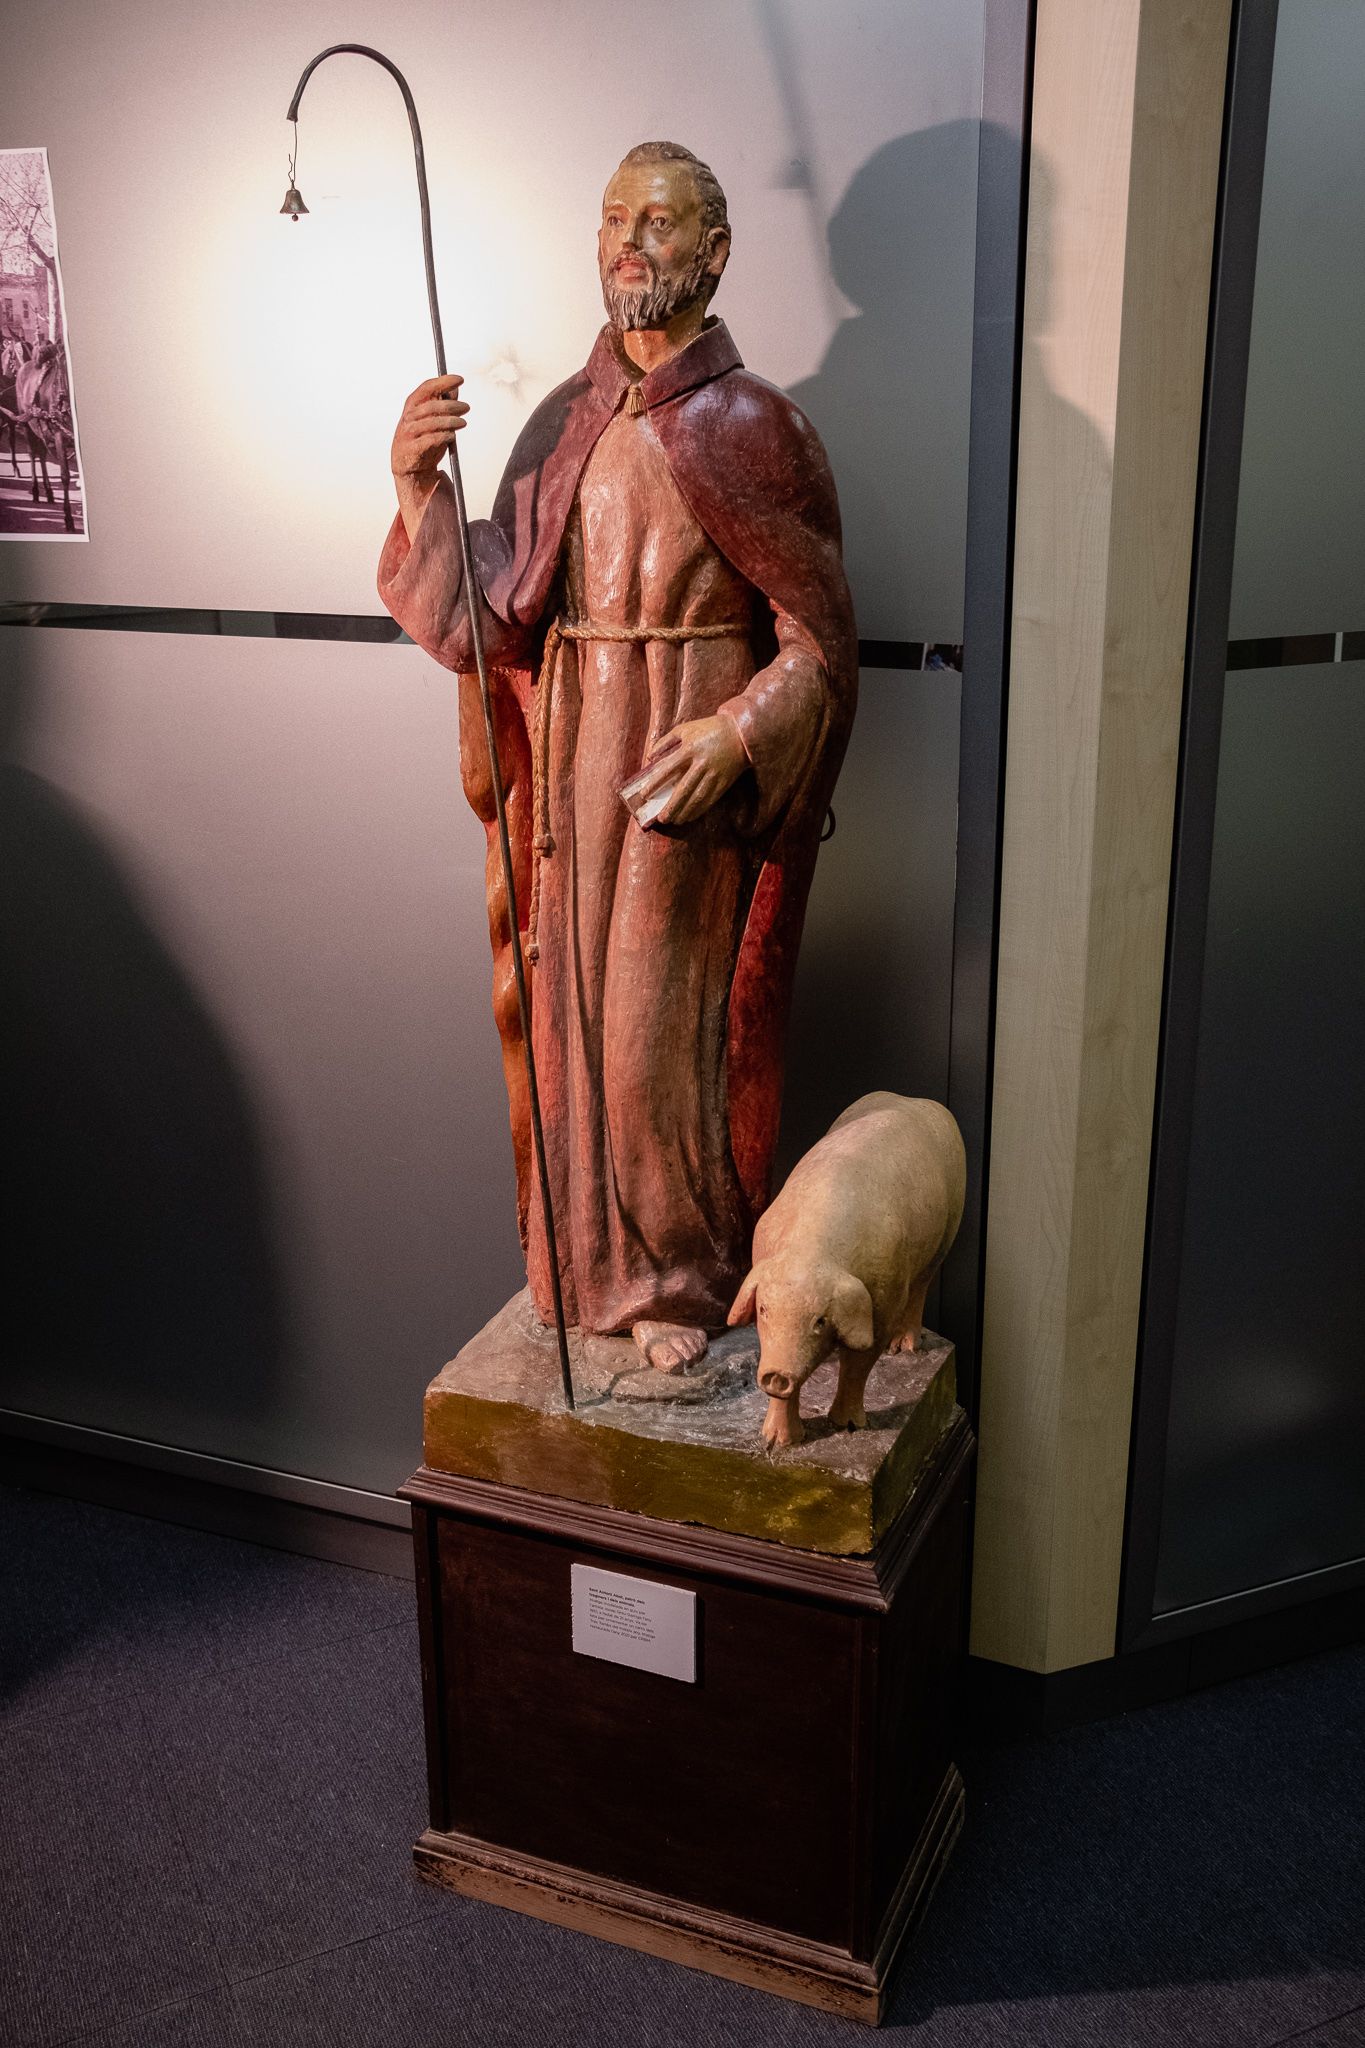 Presentació de la figura restaurada de Sant Antoni. FOTO: Ale Gómez